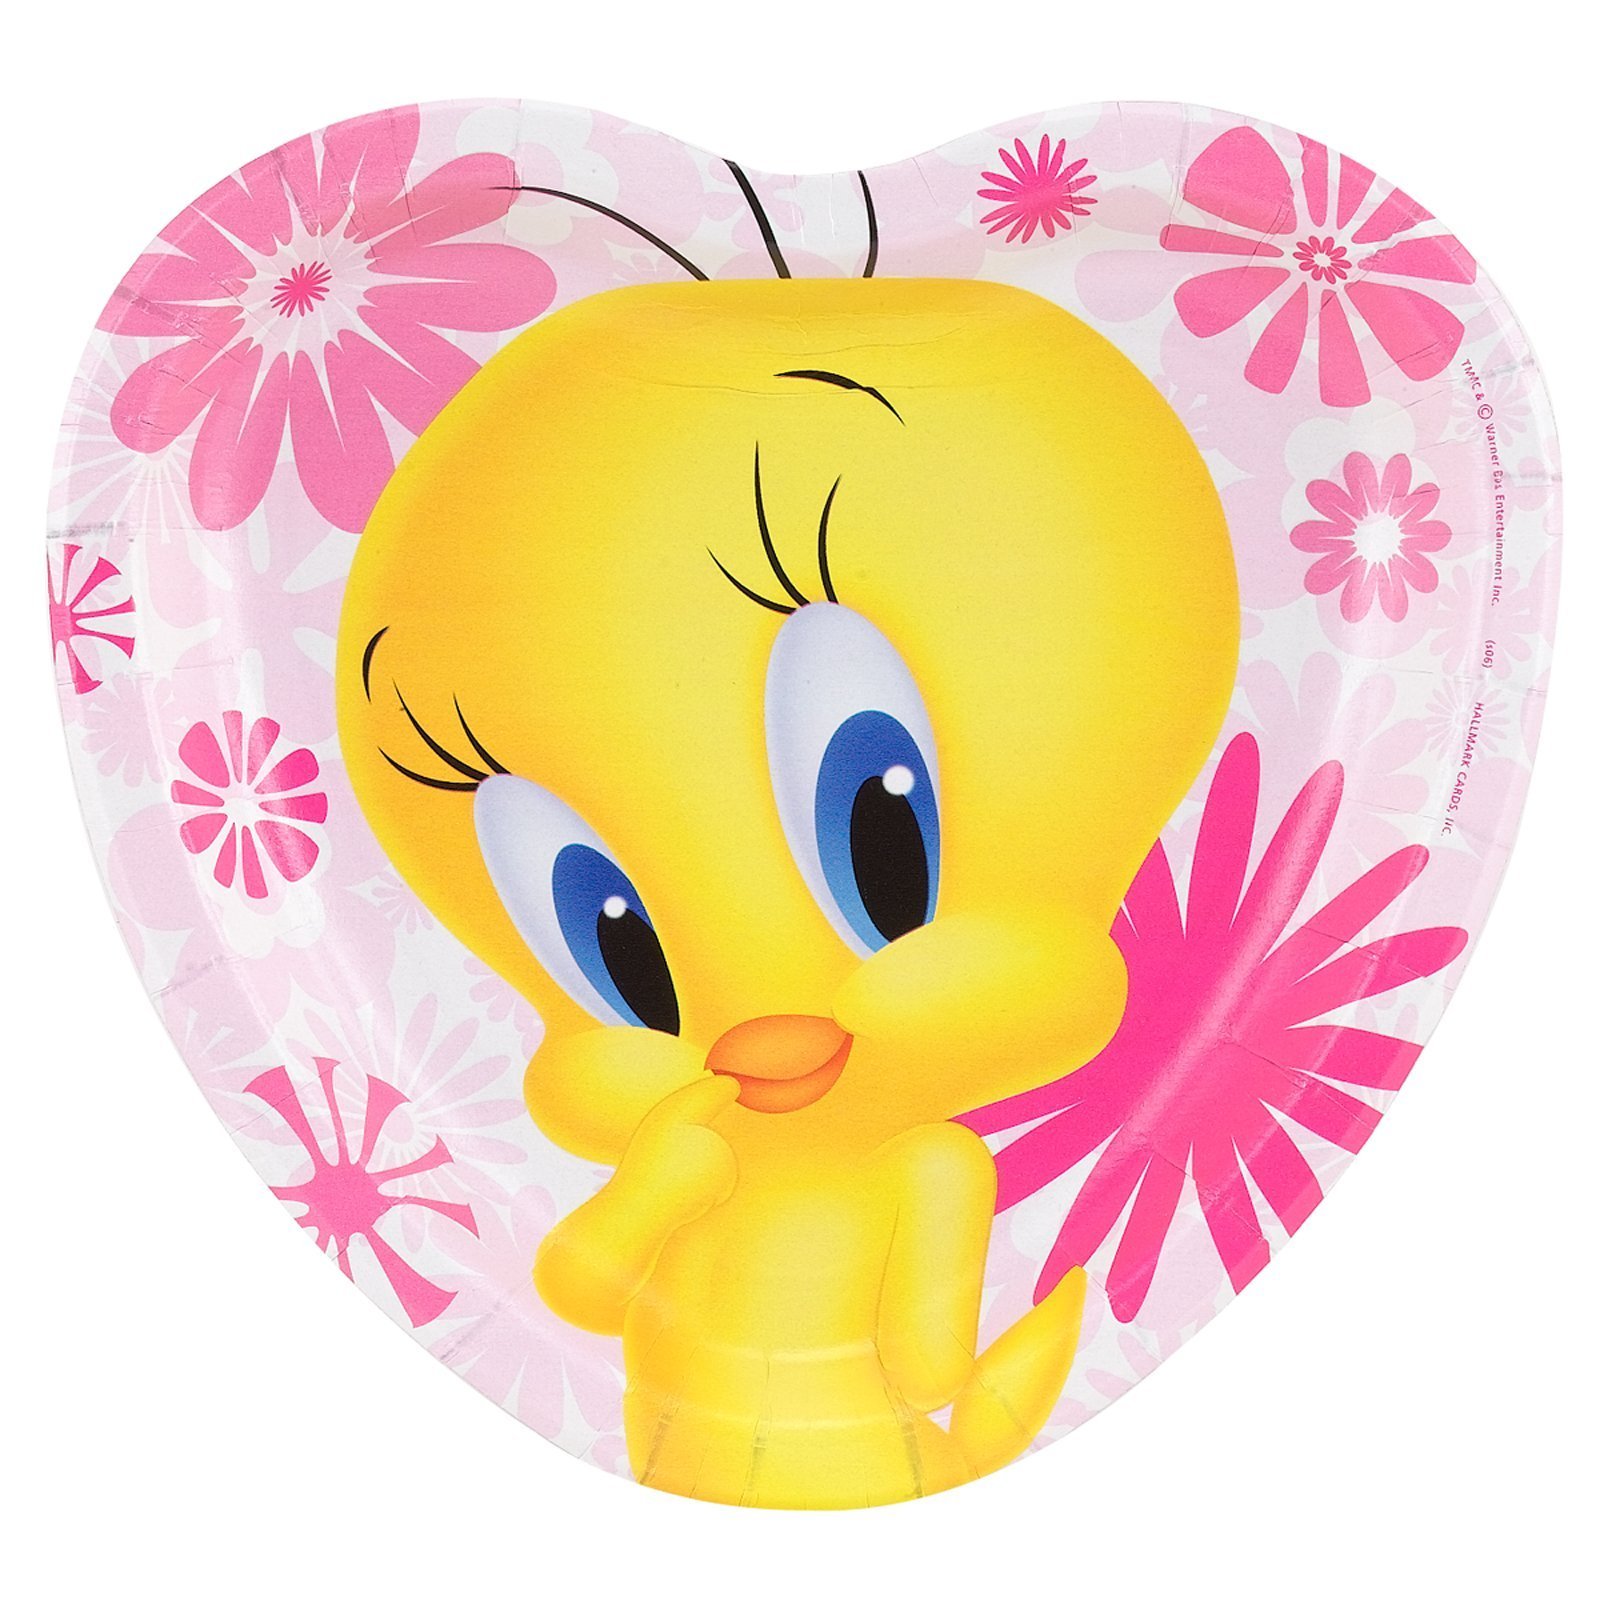 Tweety Bird Balloon - Tweety Bird Photo (5996789) - Fanpop